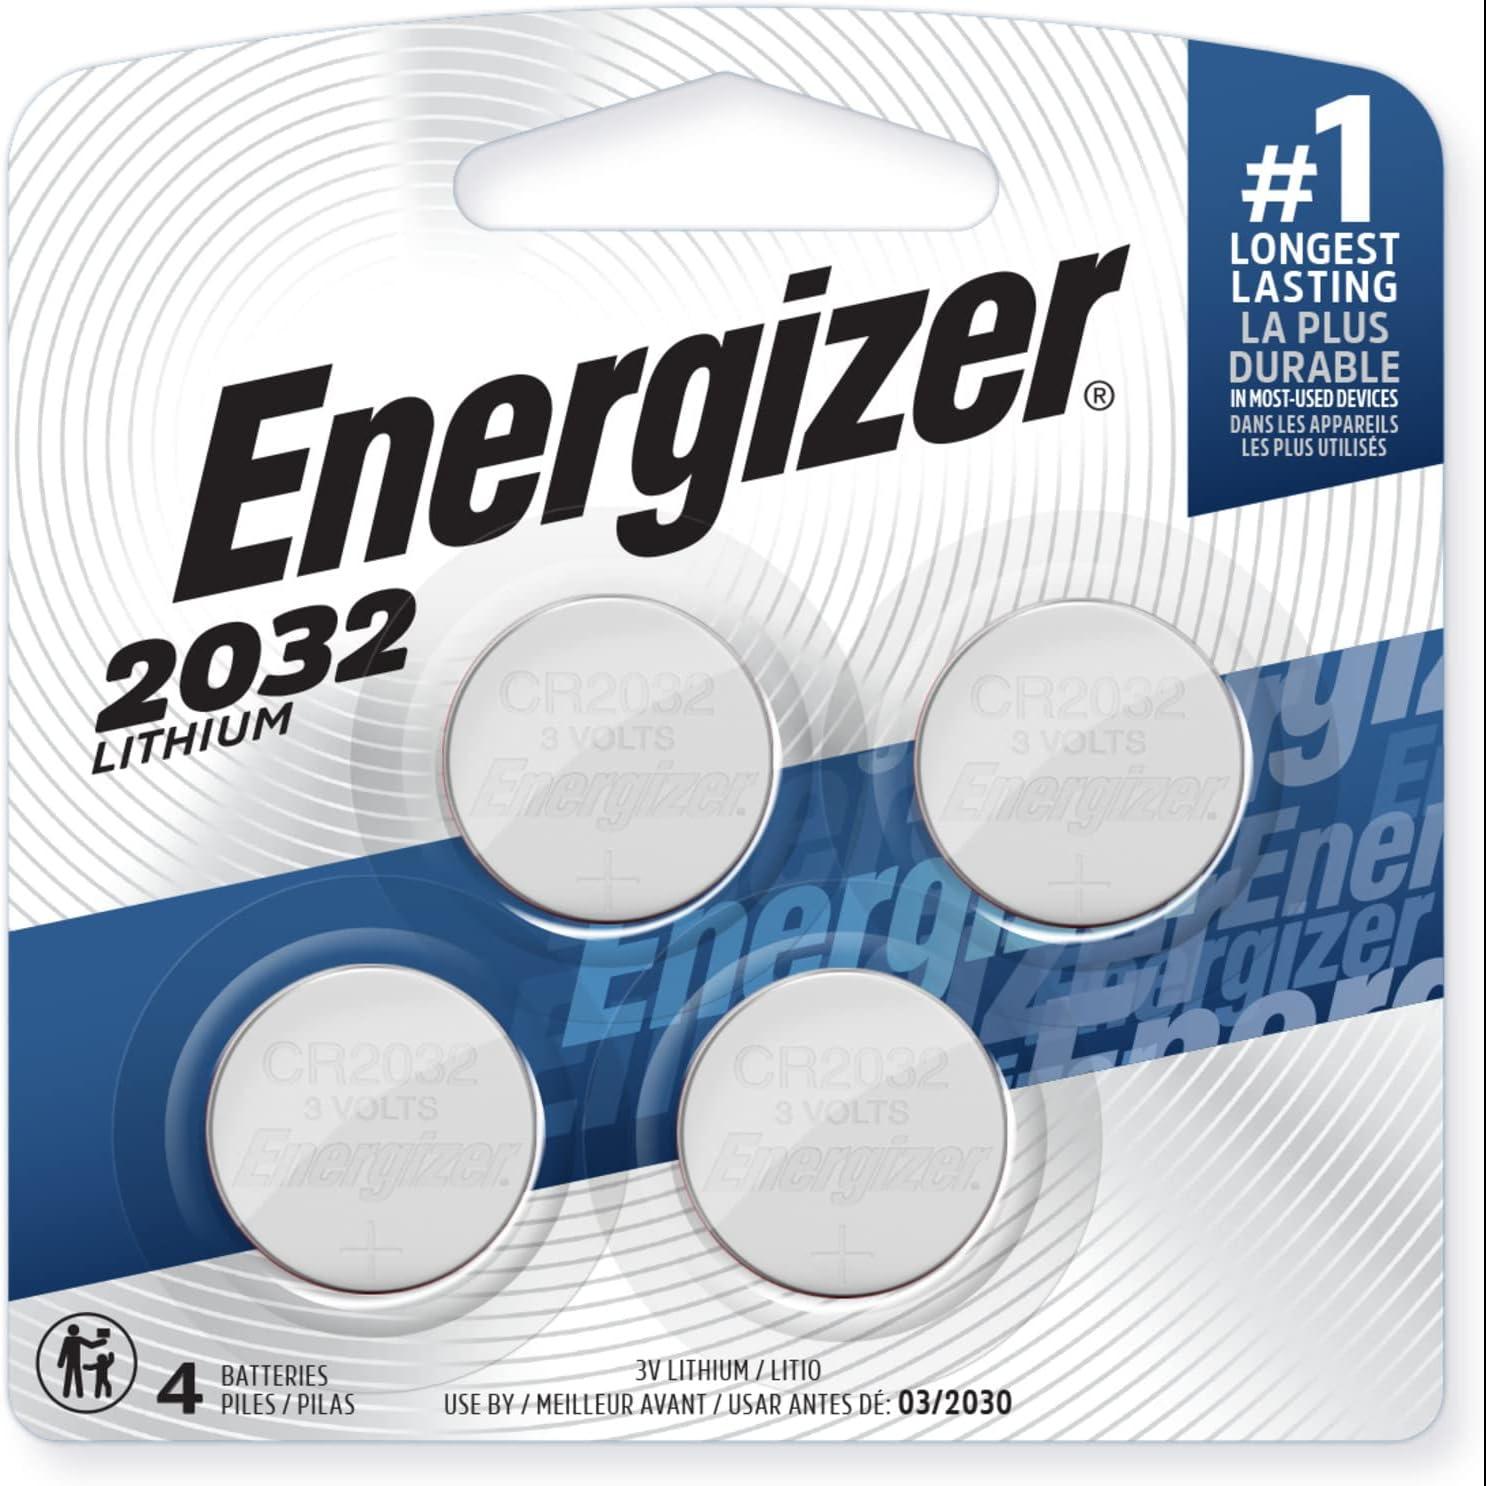 Energizer CR2032 3V Lithium Coin Batteries 4-Pack for $3.77